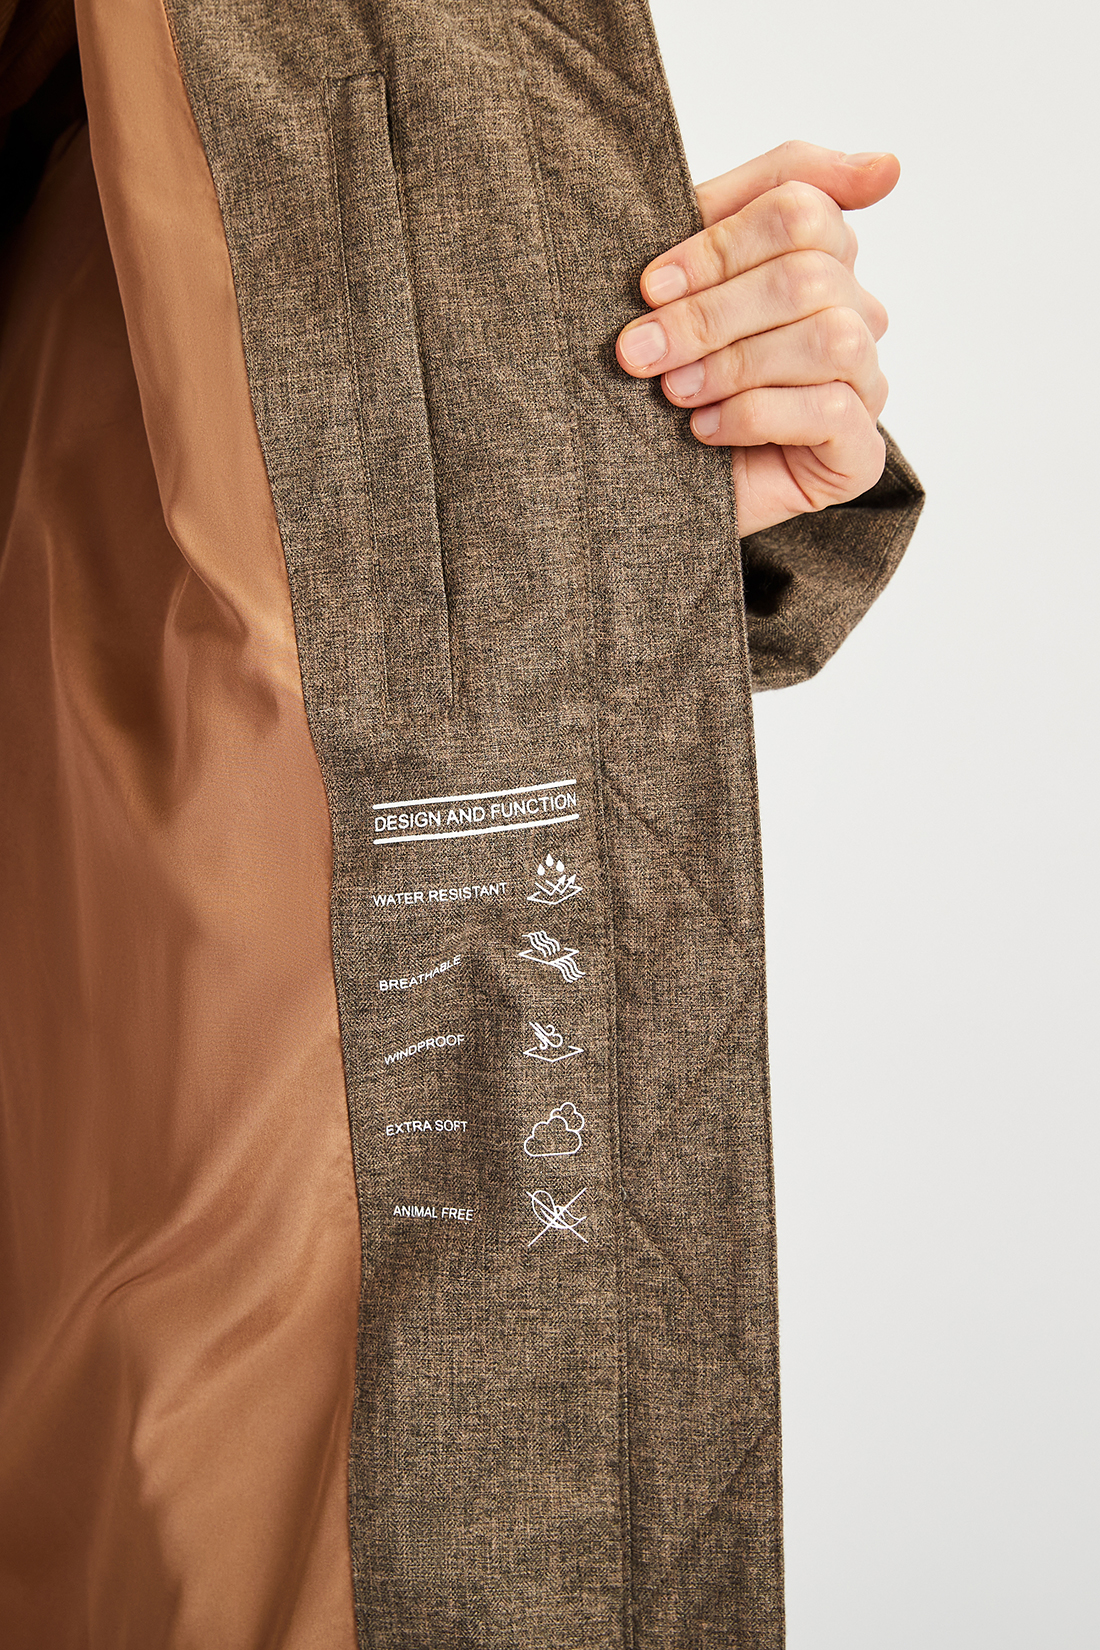 Куртка (Эко пух) (арт. baon B0422506), размер M, цвет коричневый Куртка (Эко пух) (арт. baon B0422506) - фото 3